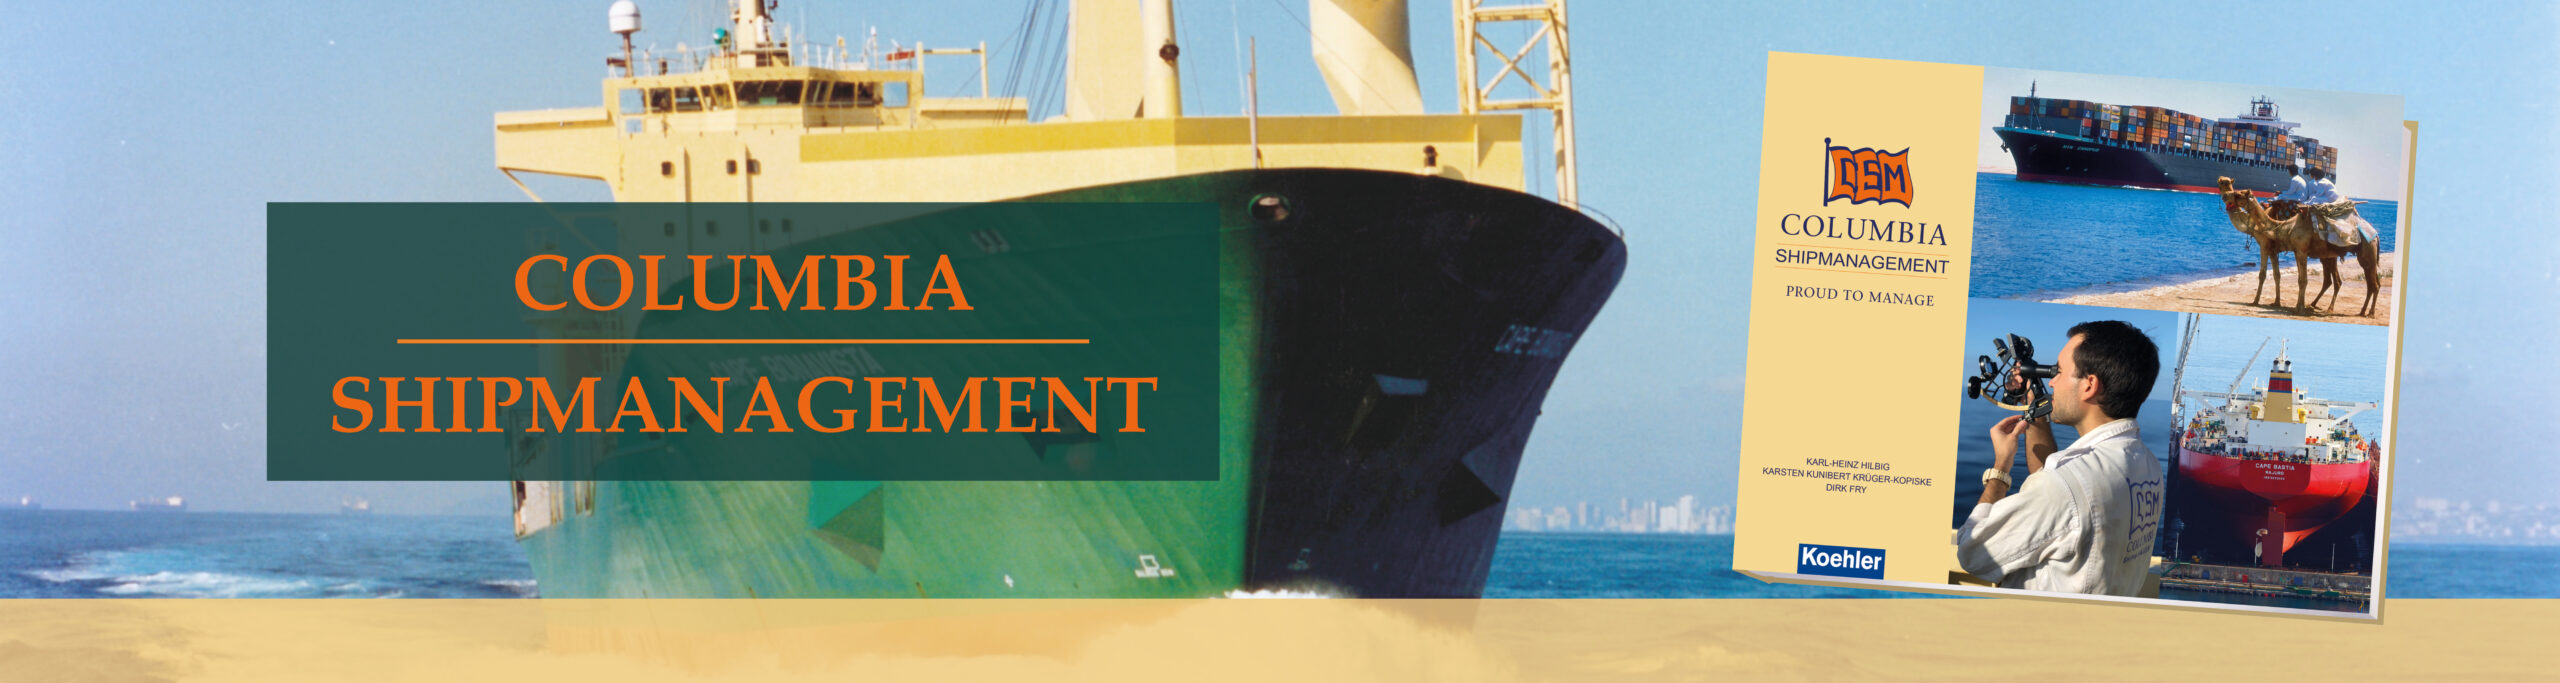 Columbia Shipmanagement Slider